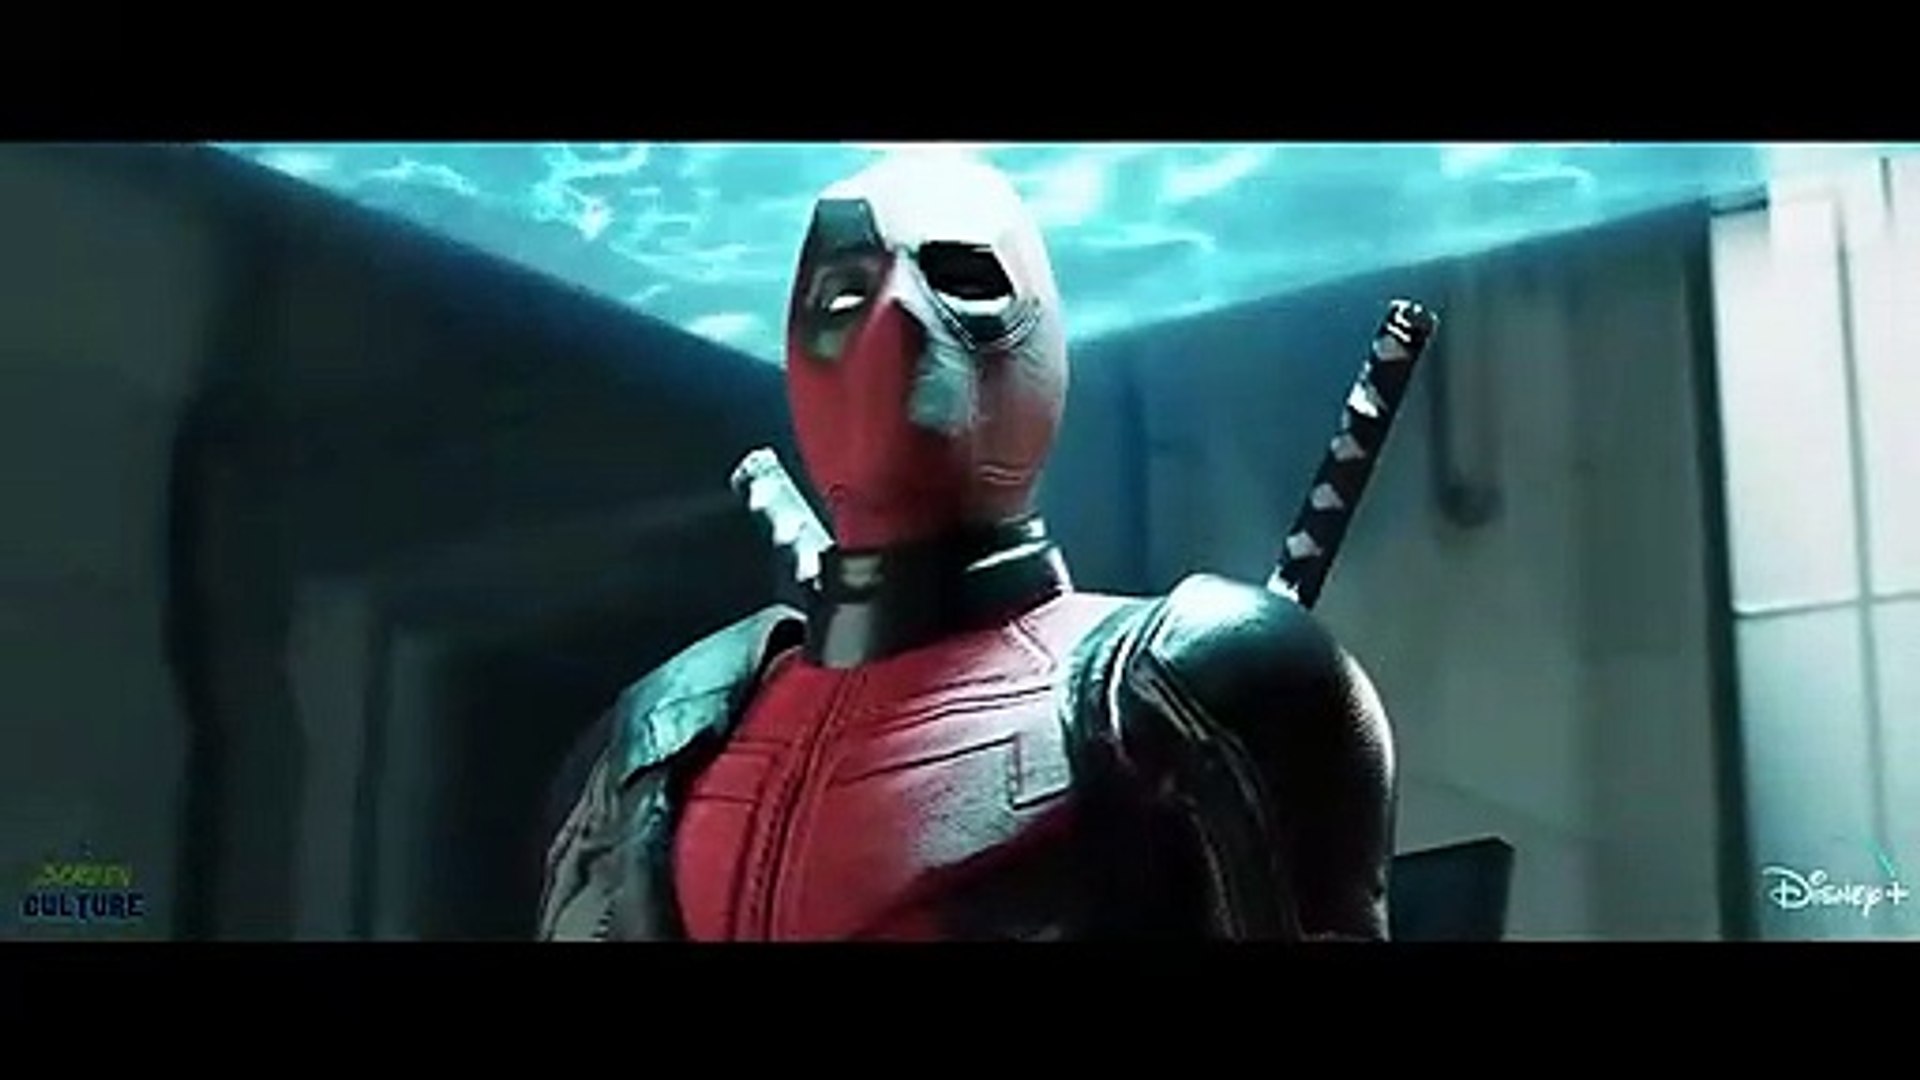 DEADPOOL 3 - First Look Trailer (2023) Marvel Studios & Disney+ Movie